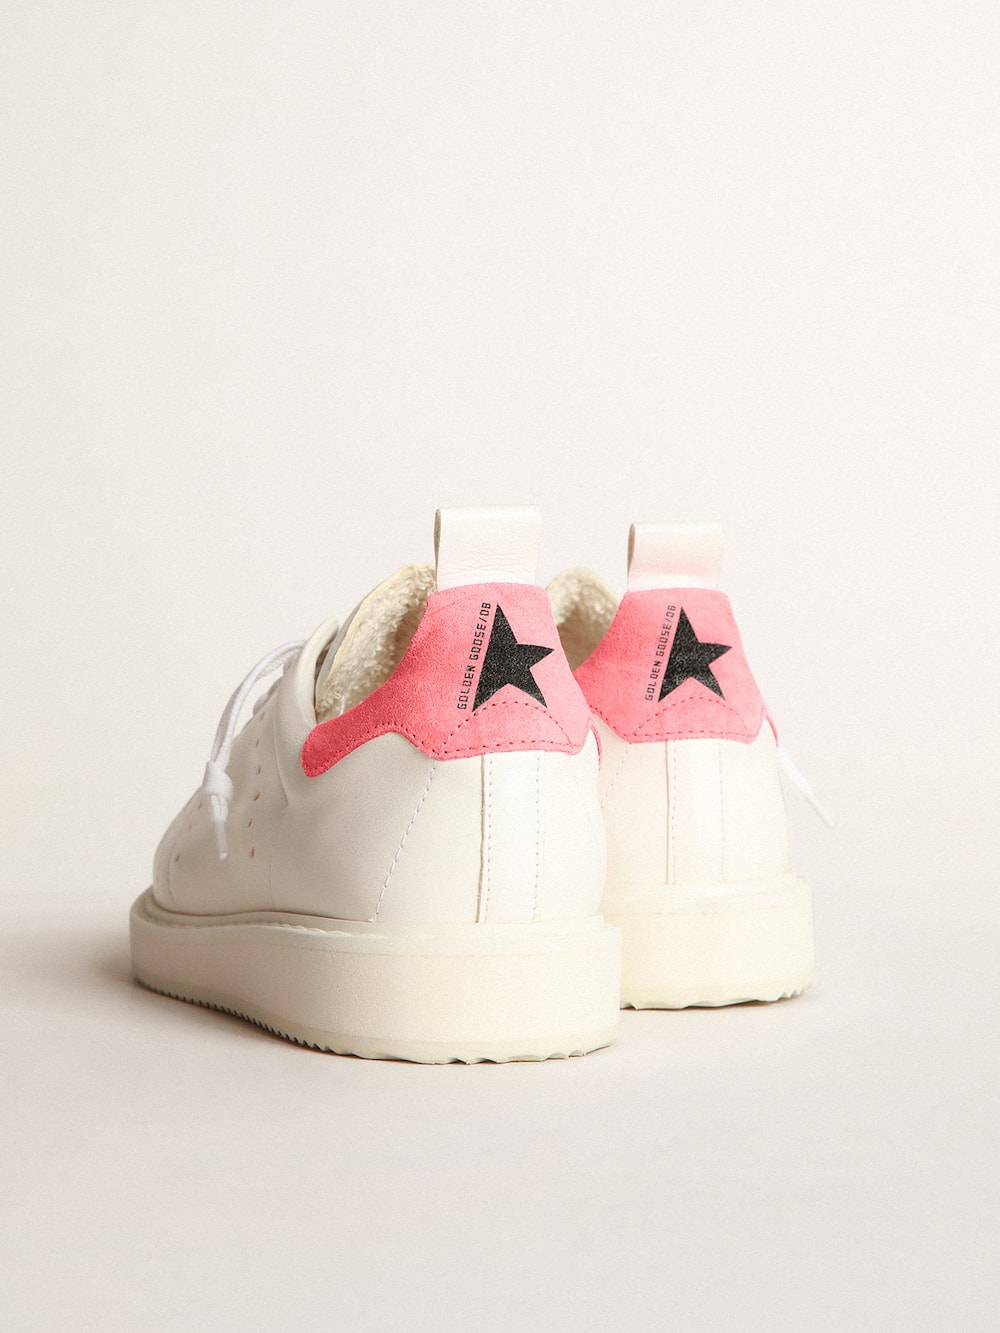 Golden Goose - Sneakers Starter en cuir nappa blanc avec contrefort en daim rose in 